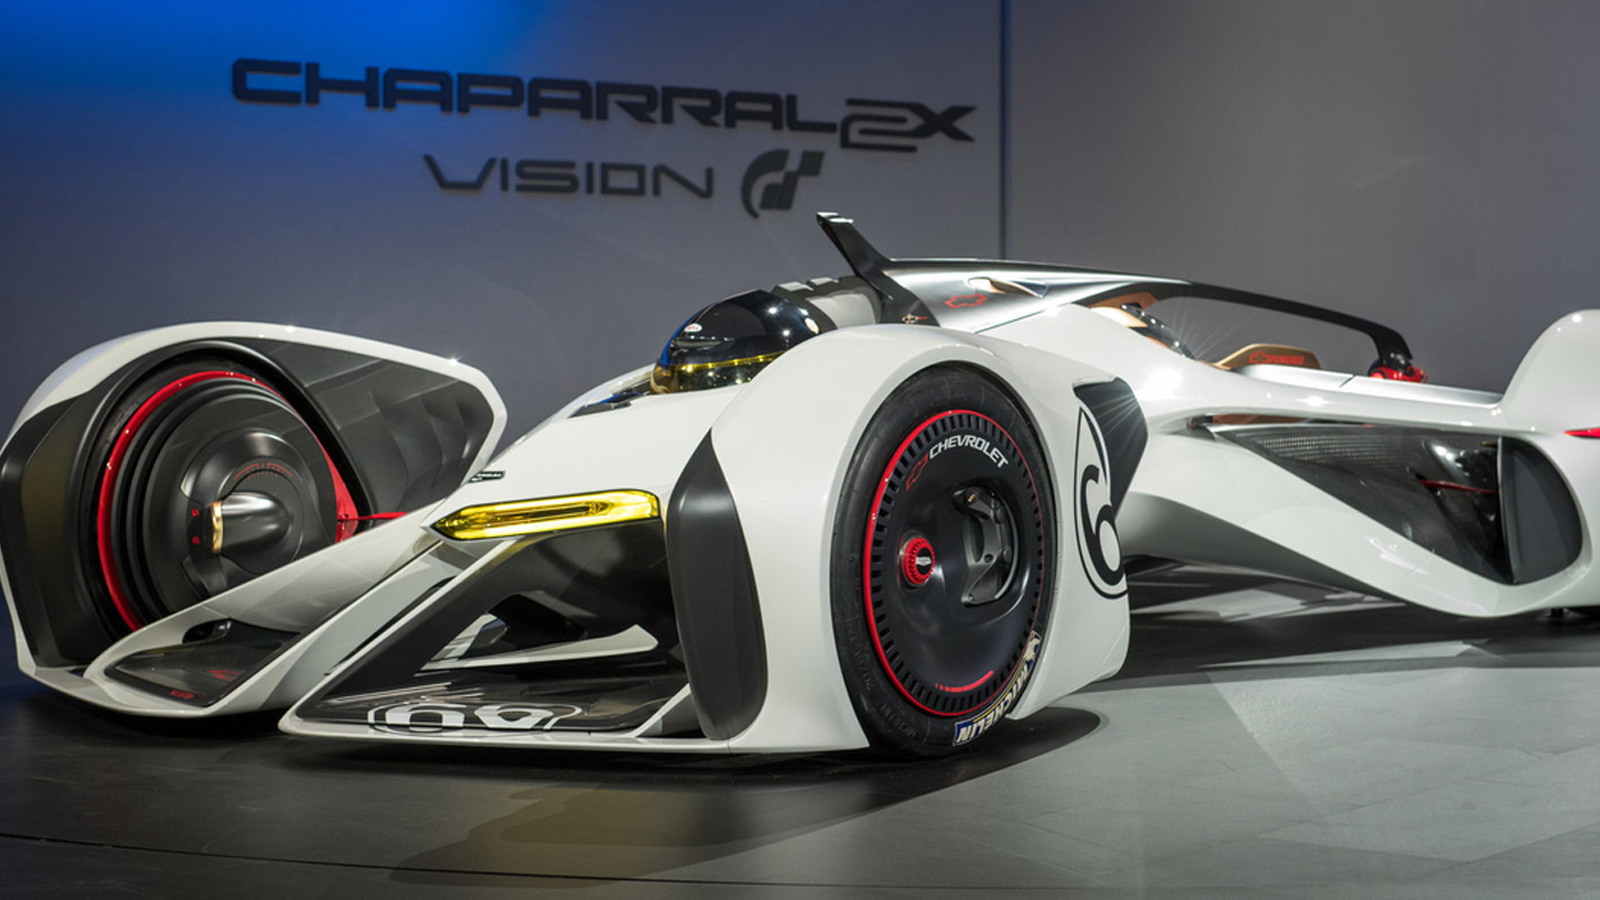 Chevrolet Chaparral 2X Vision Gran Turismo Concept, 2014 Los Angeles Auto Show